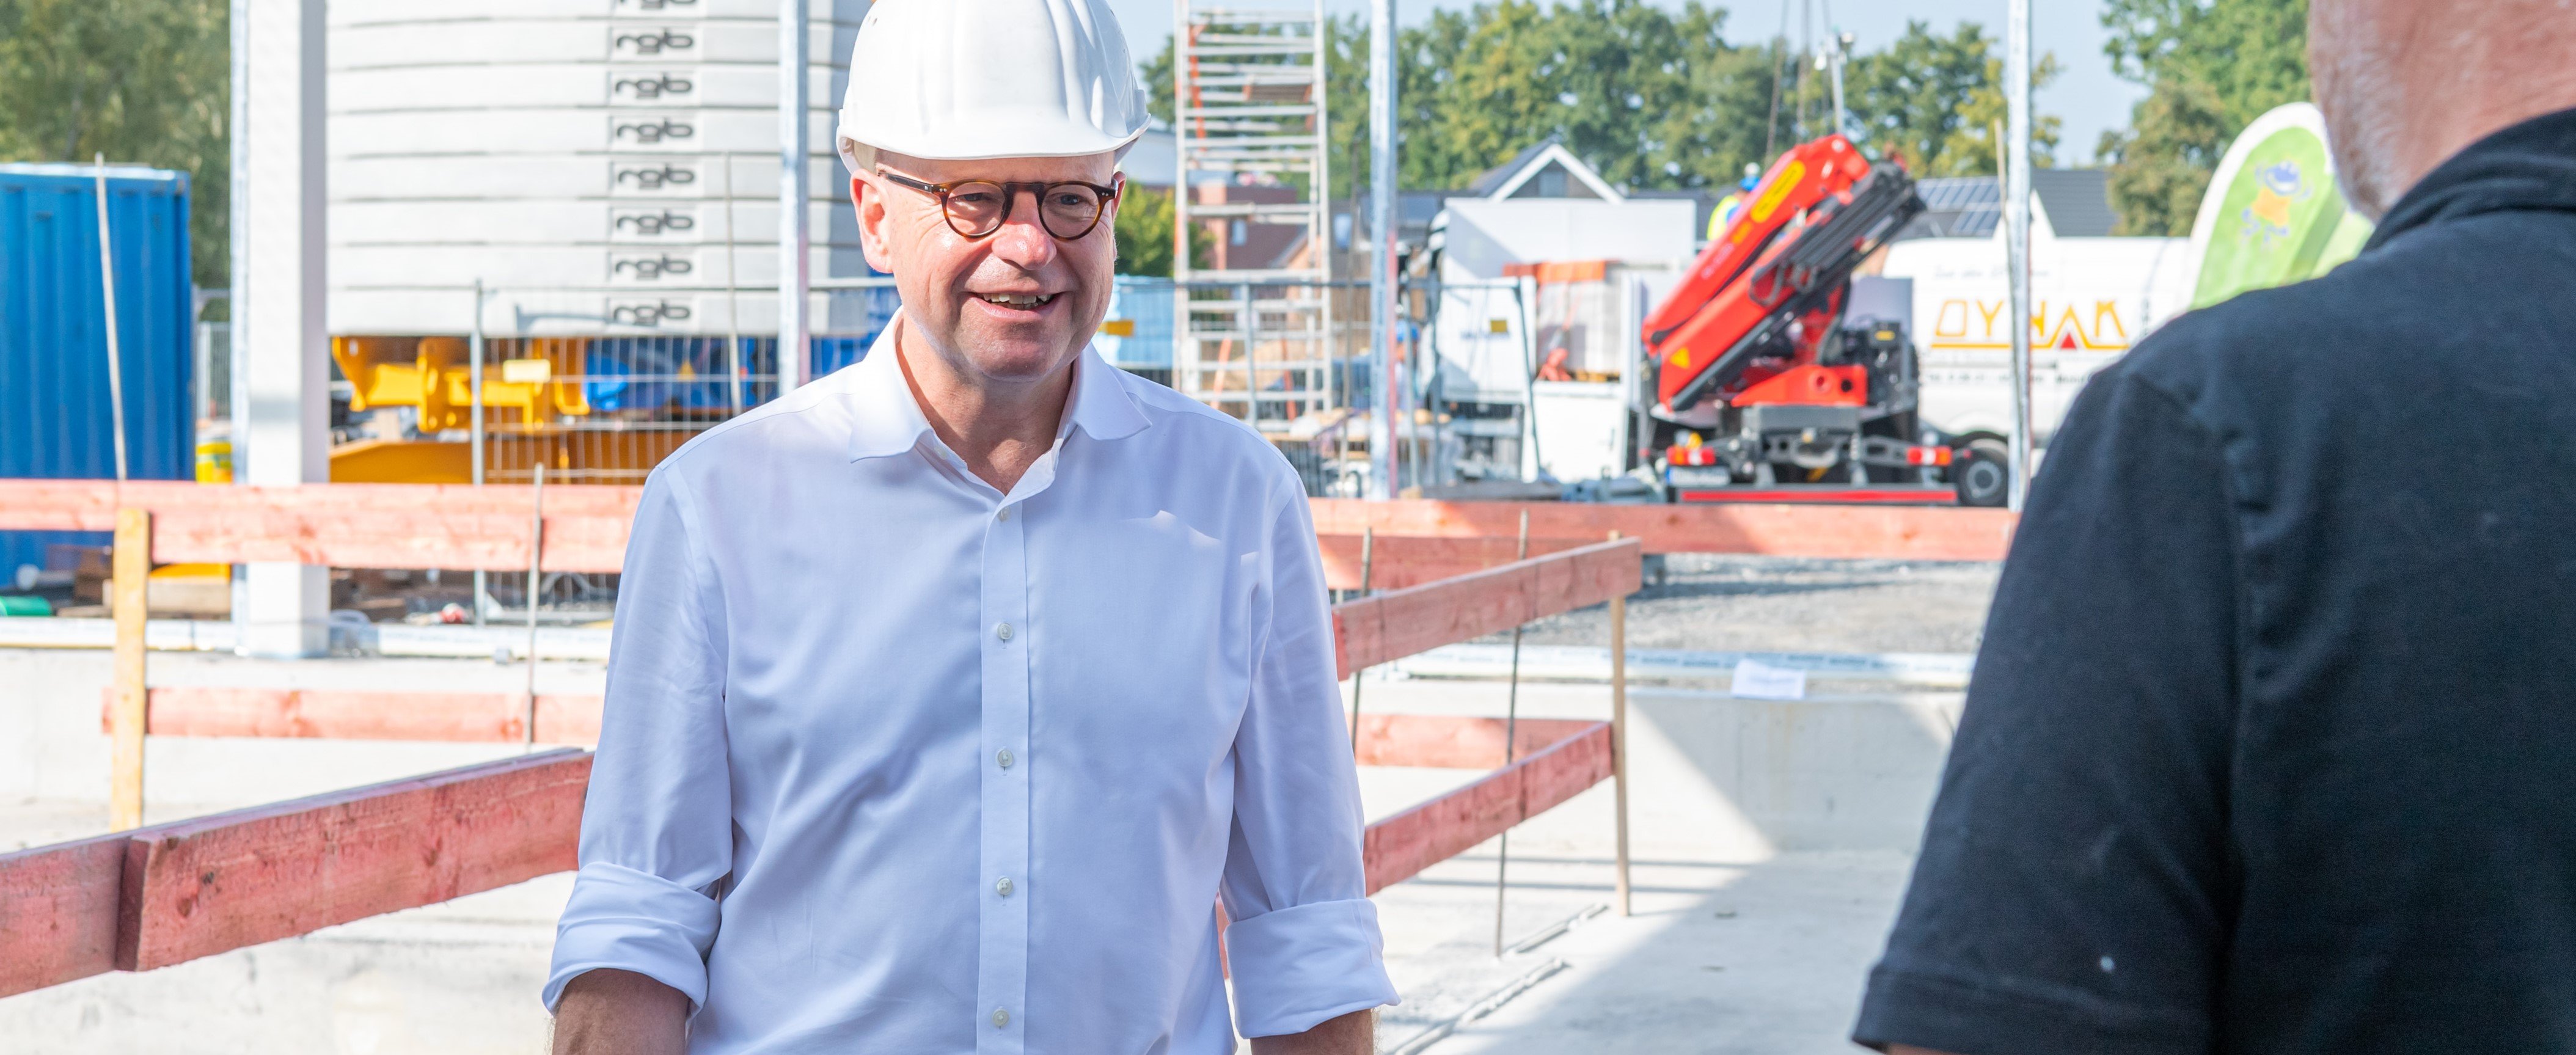 Oberbürgermeister Markus Lewe beim Baustellen-Rundgang.  Foto: Presseamt Münster.